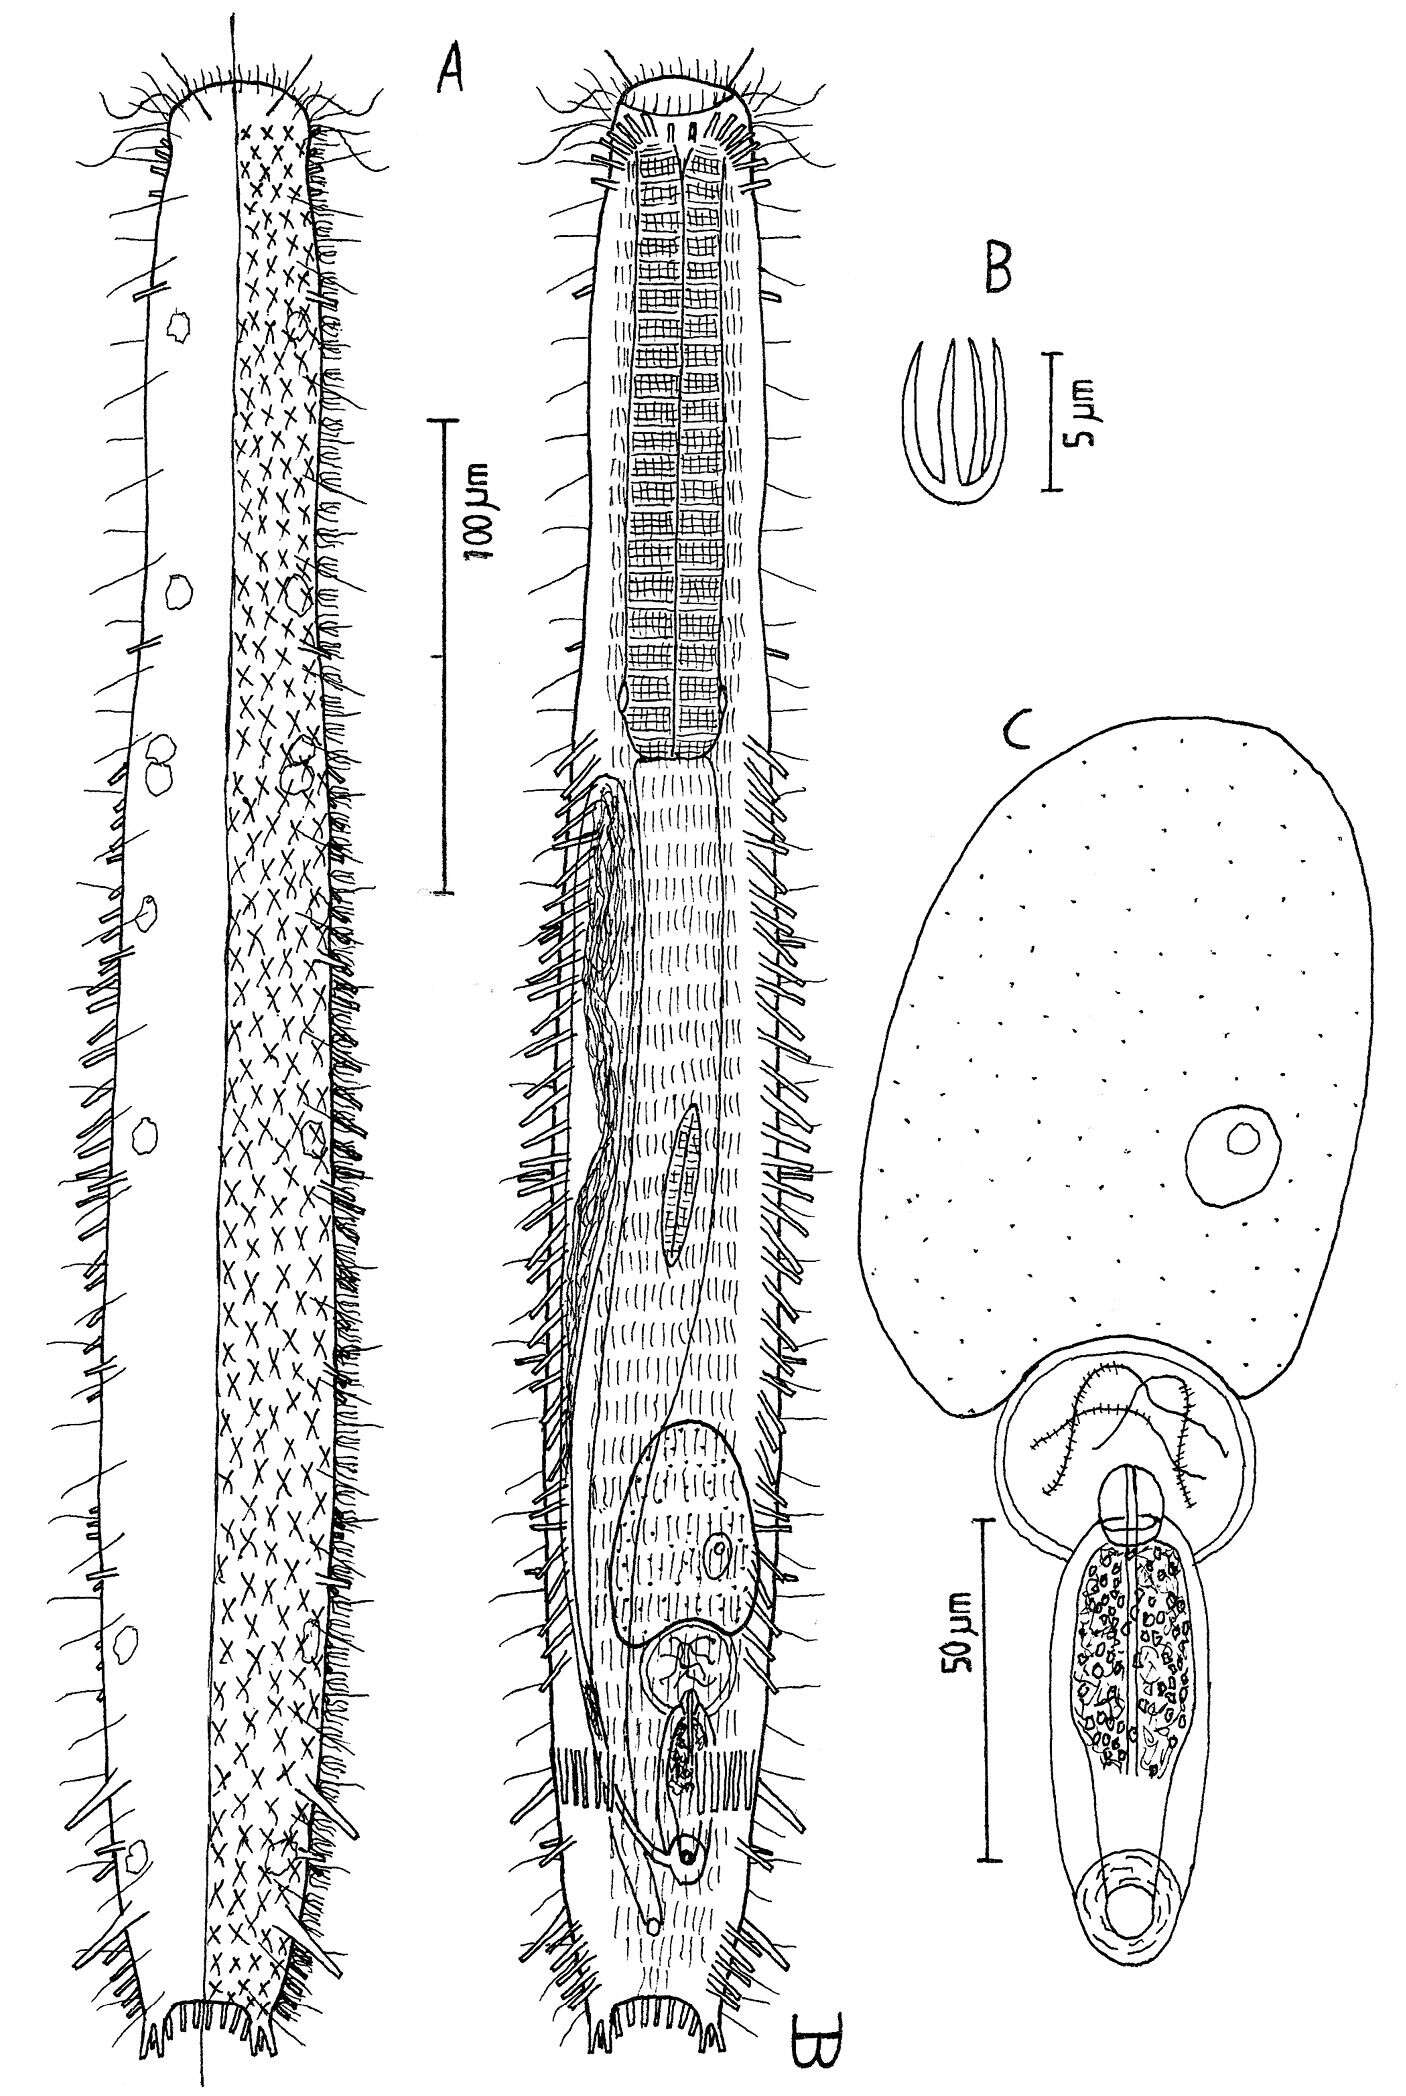 Image of Thaumastodermatidae